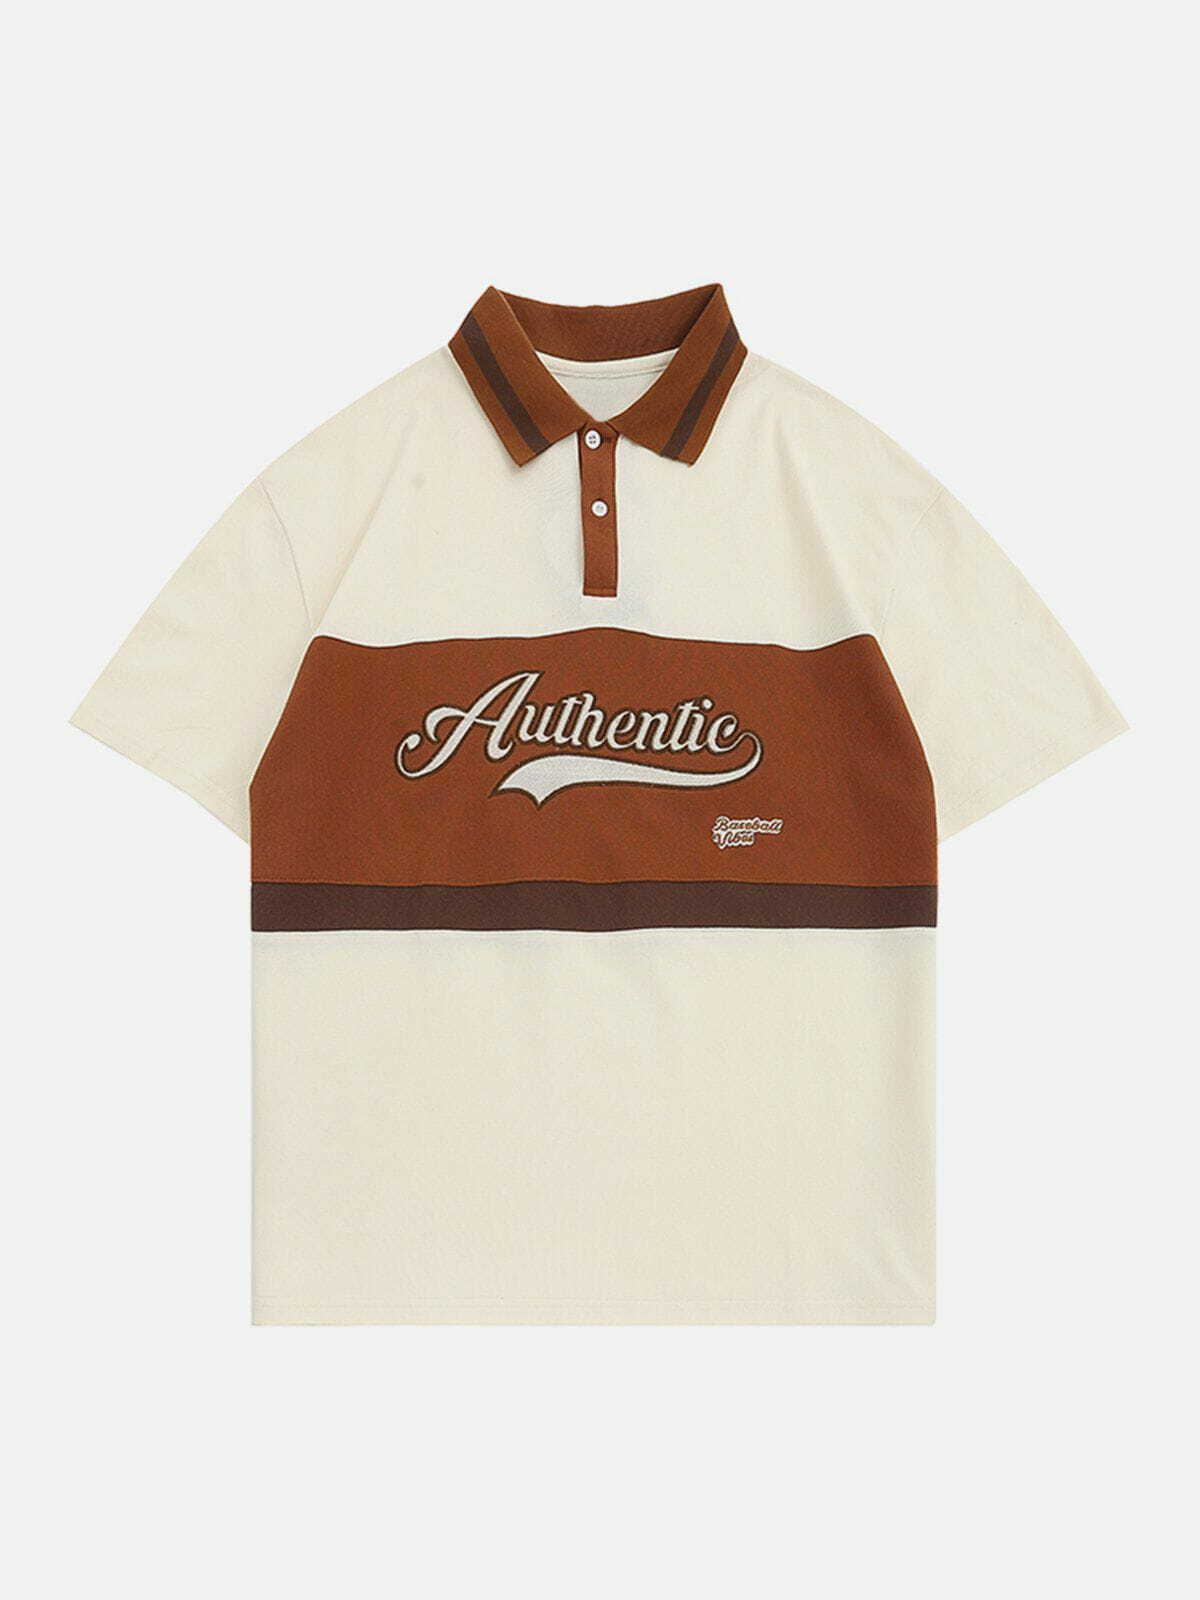 retro baseball splicing tee edgy  urban streetwear shirt 5367